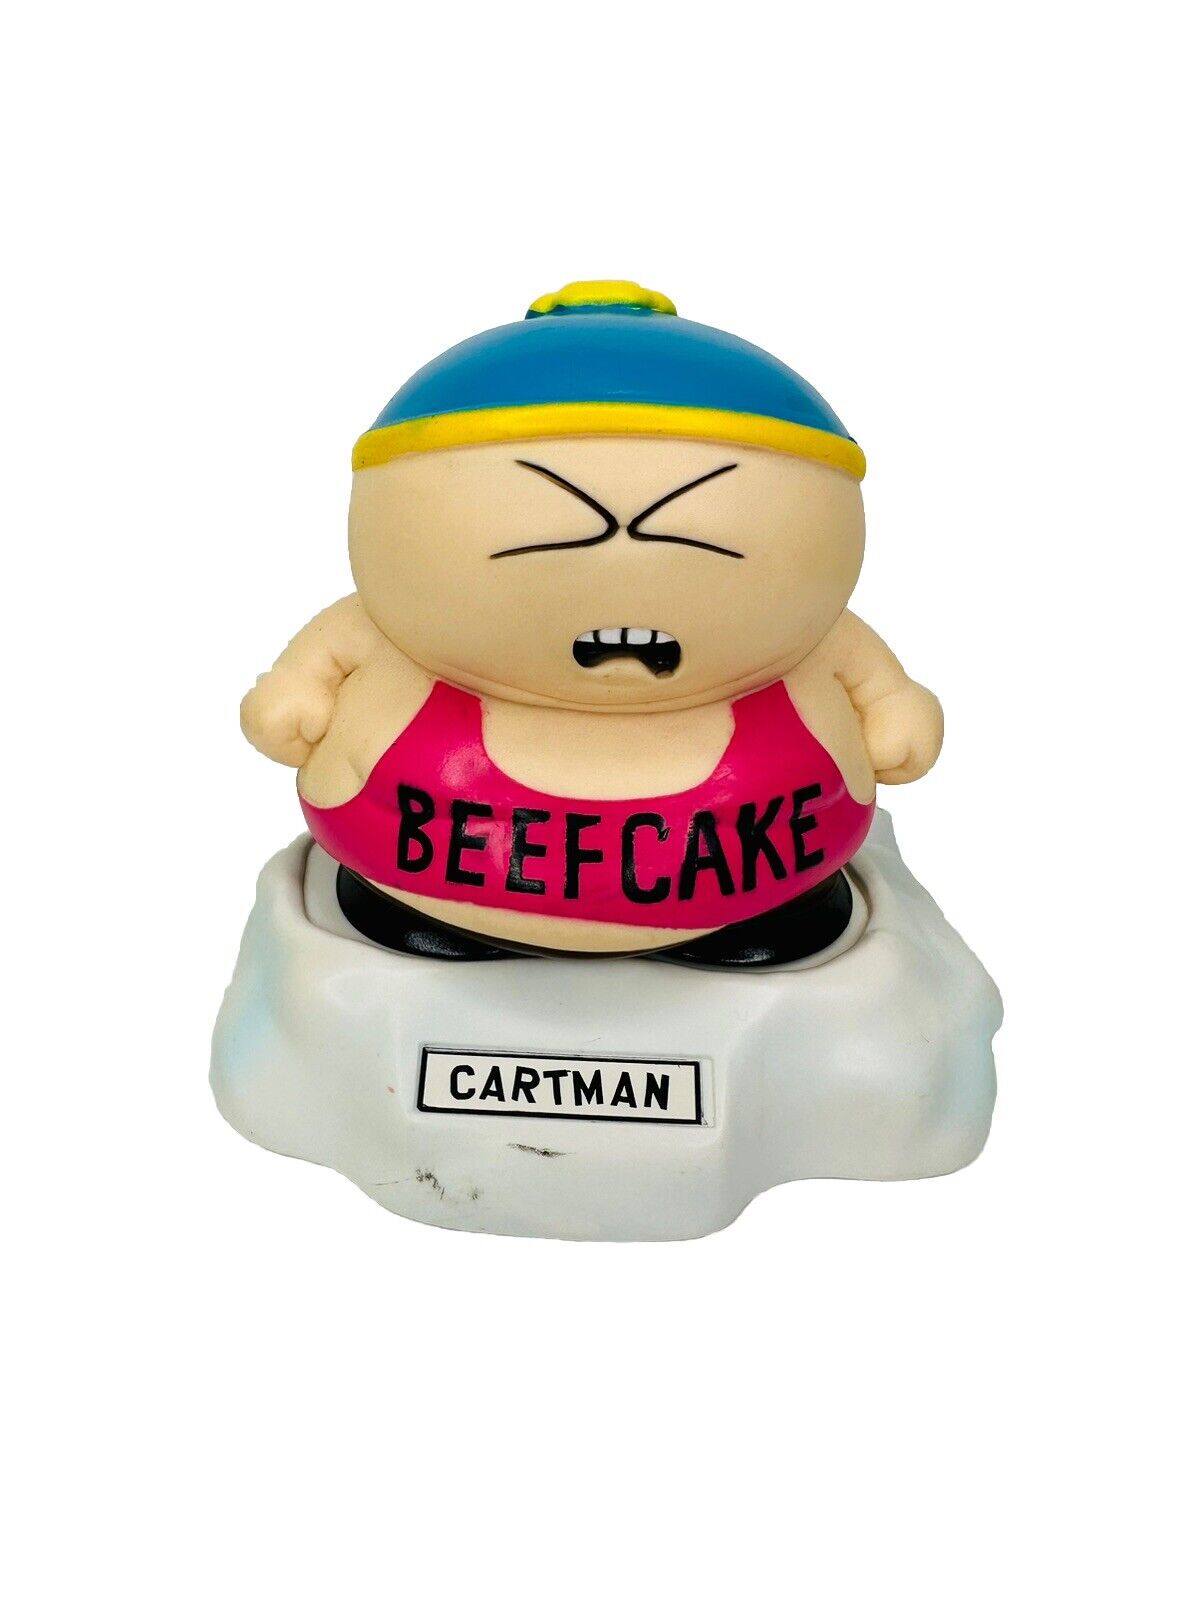 Adult 1998 South Park BEEFCAKE Cartman Talking Deskmate Not Tested